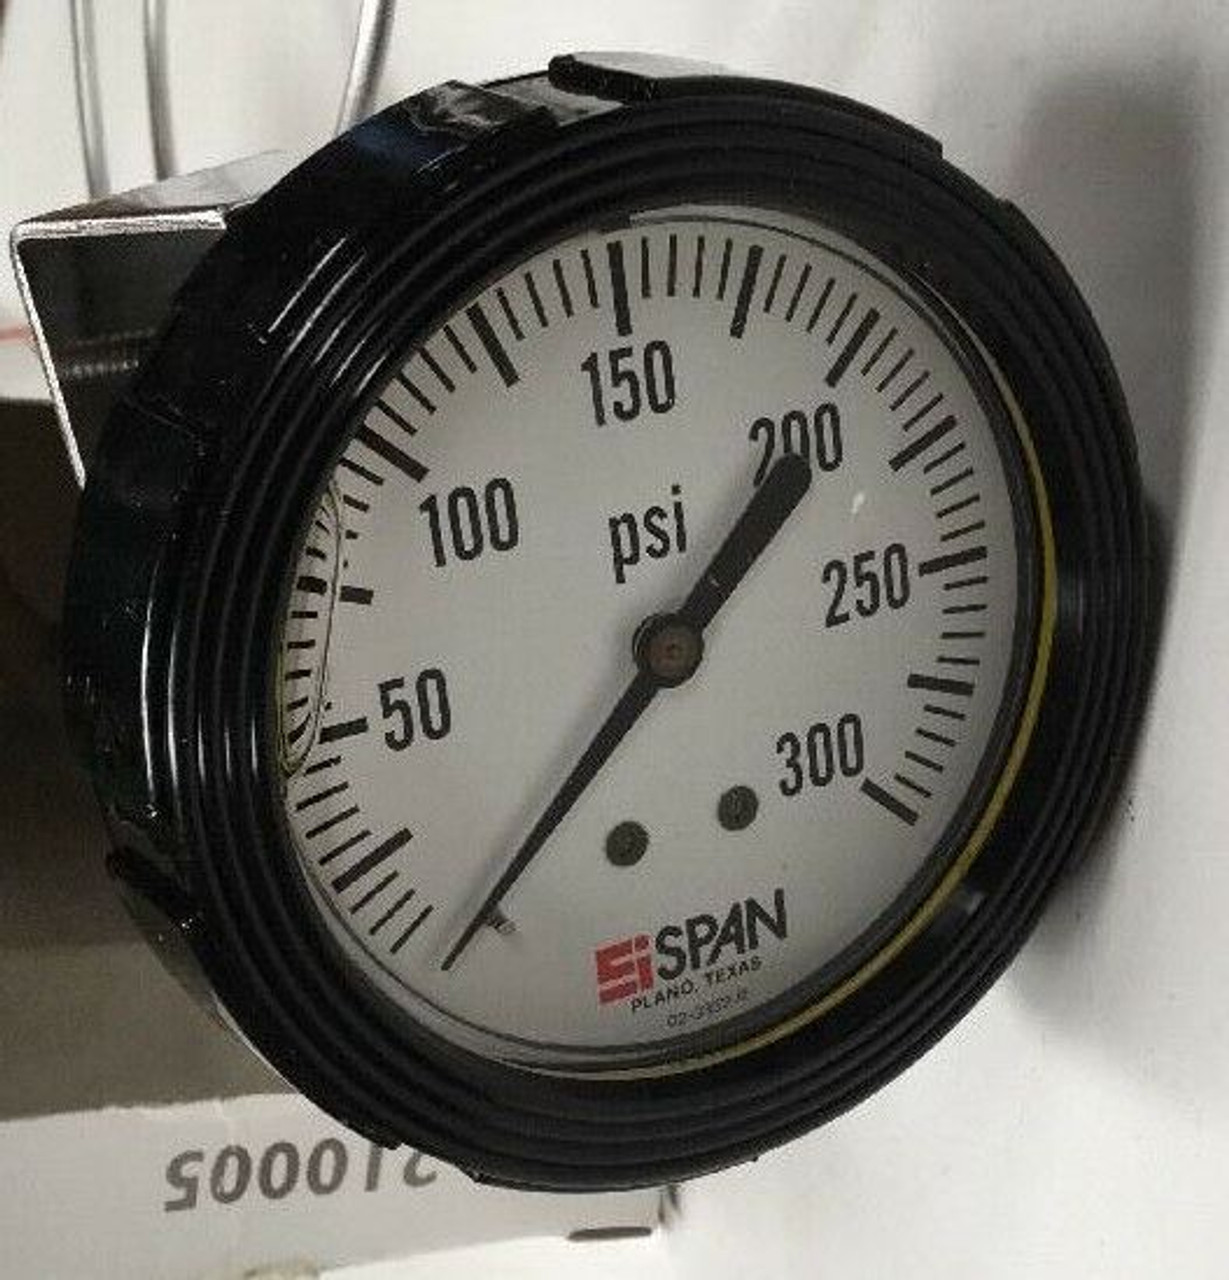 EiSpan Span Liquid Filled Capillary Pressure Gauge 300 psi 210005 Agent Tank